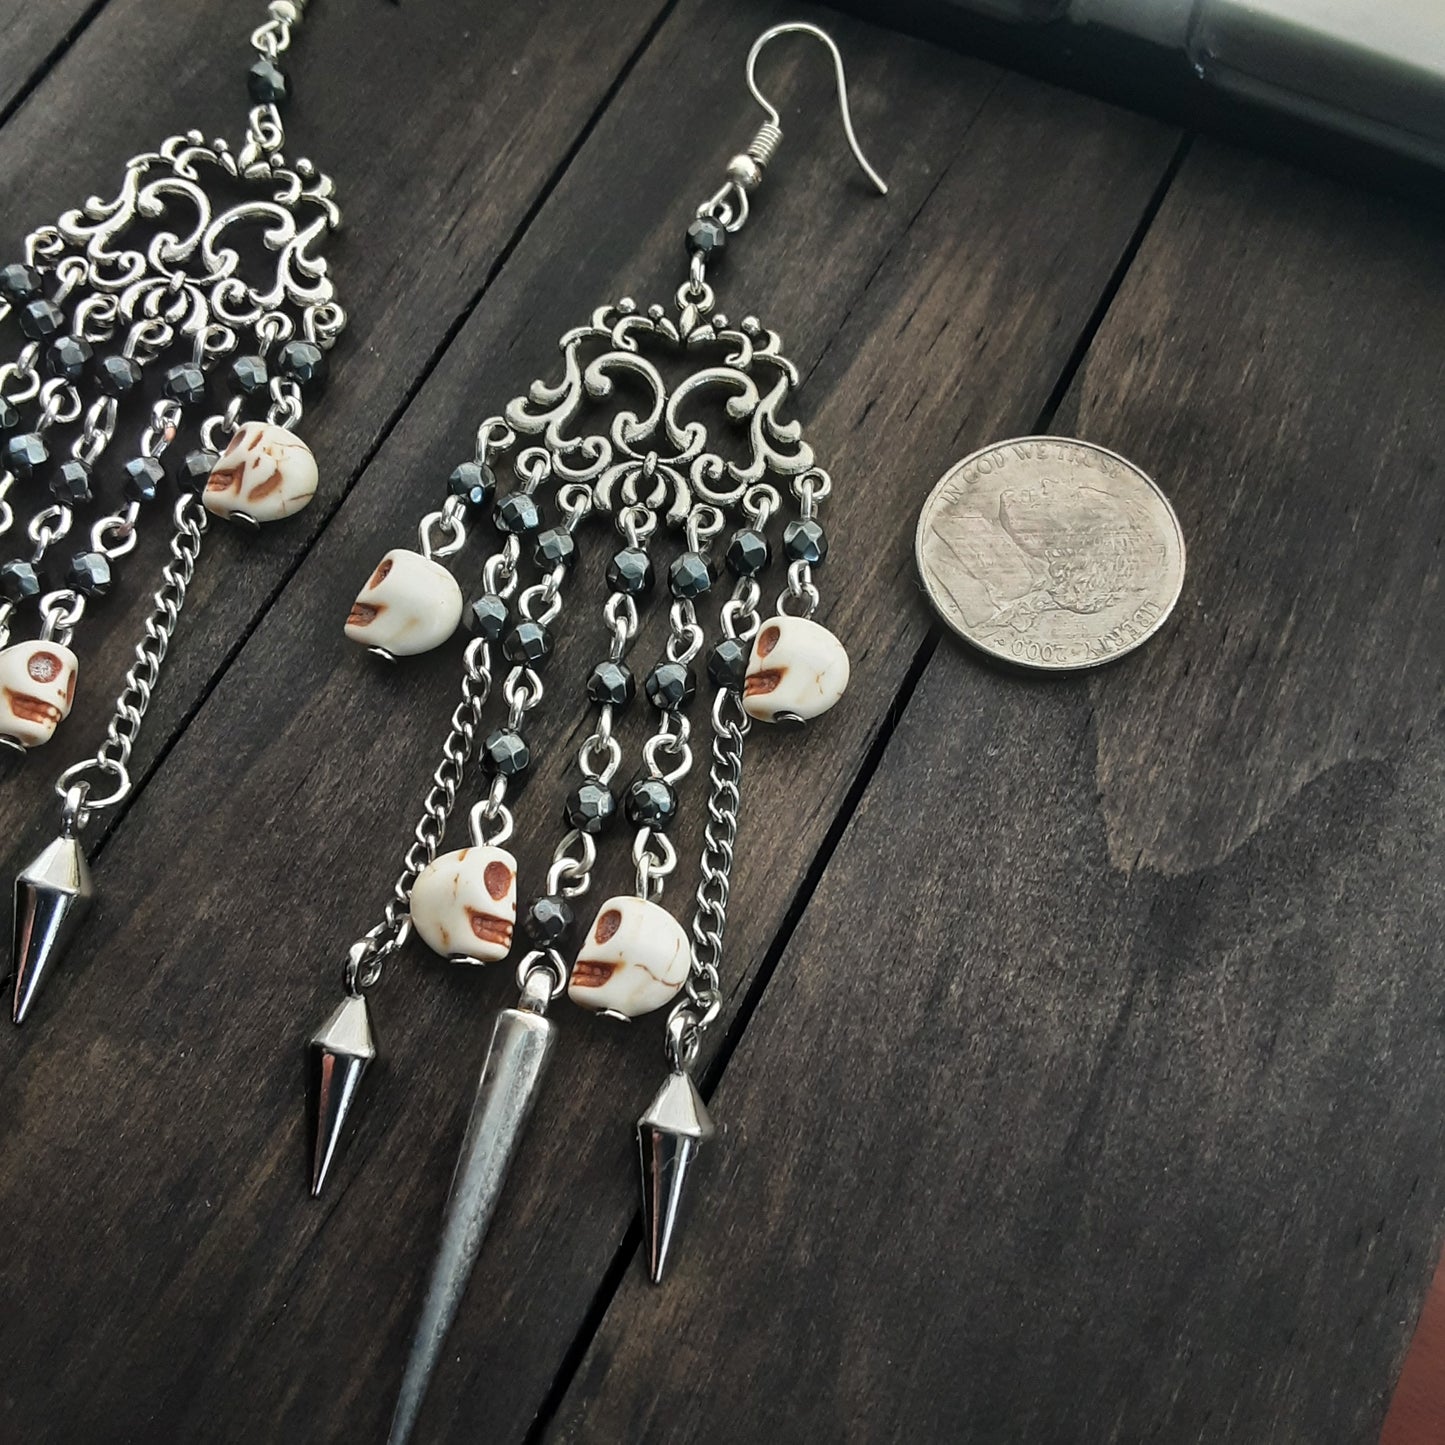 Gothic Skull and spike chandelier earrings